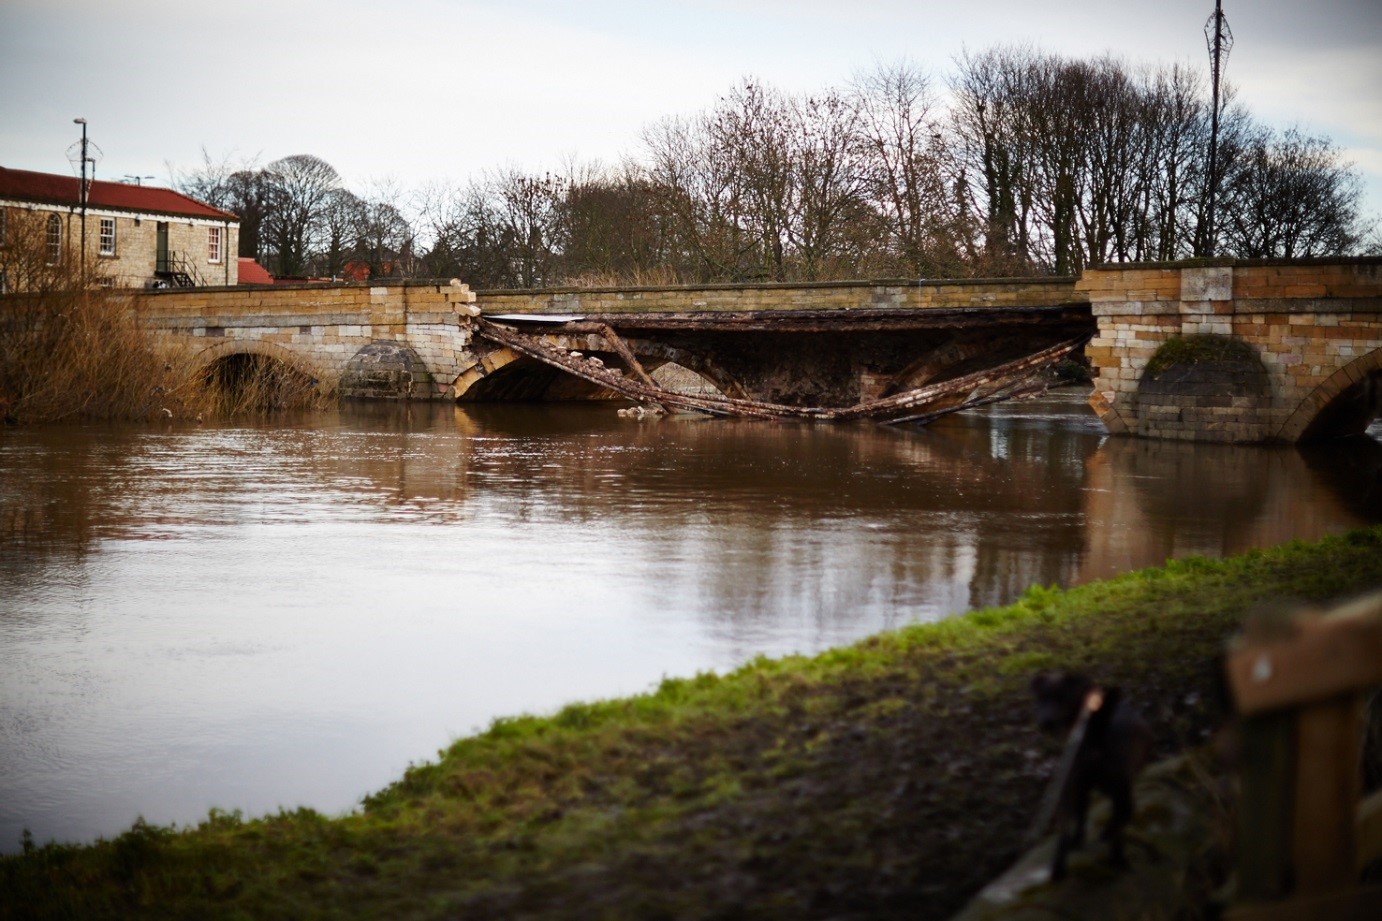 Tadcaster Bridge collapse, December 2015